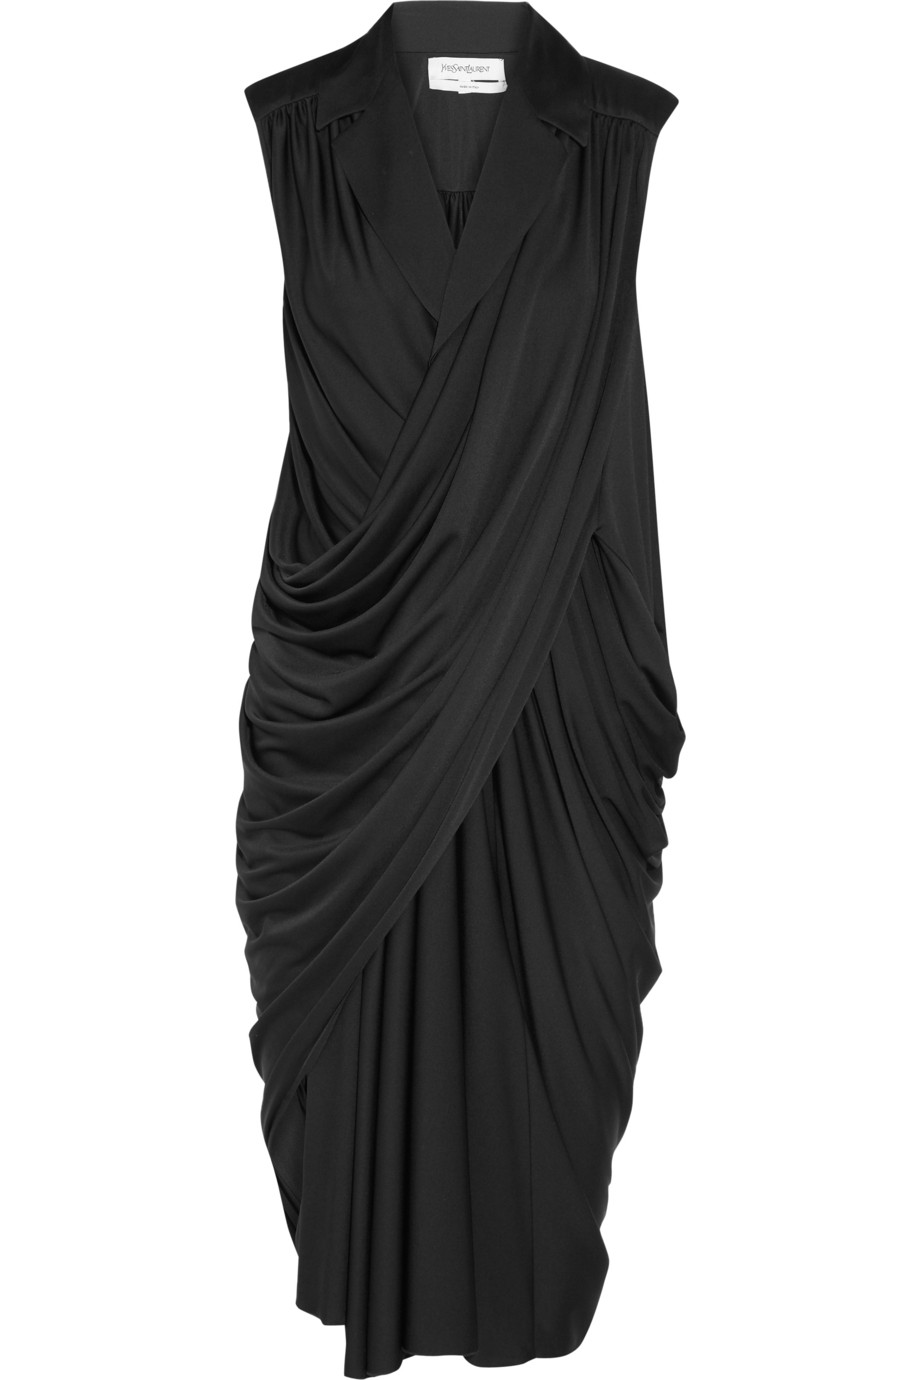 Saint laurent Draped Satin Jersey Dress in Black | Lyst